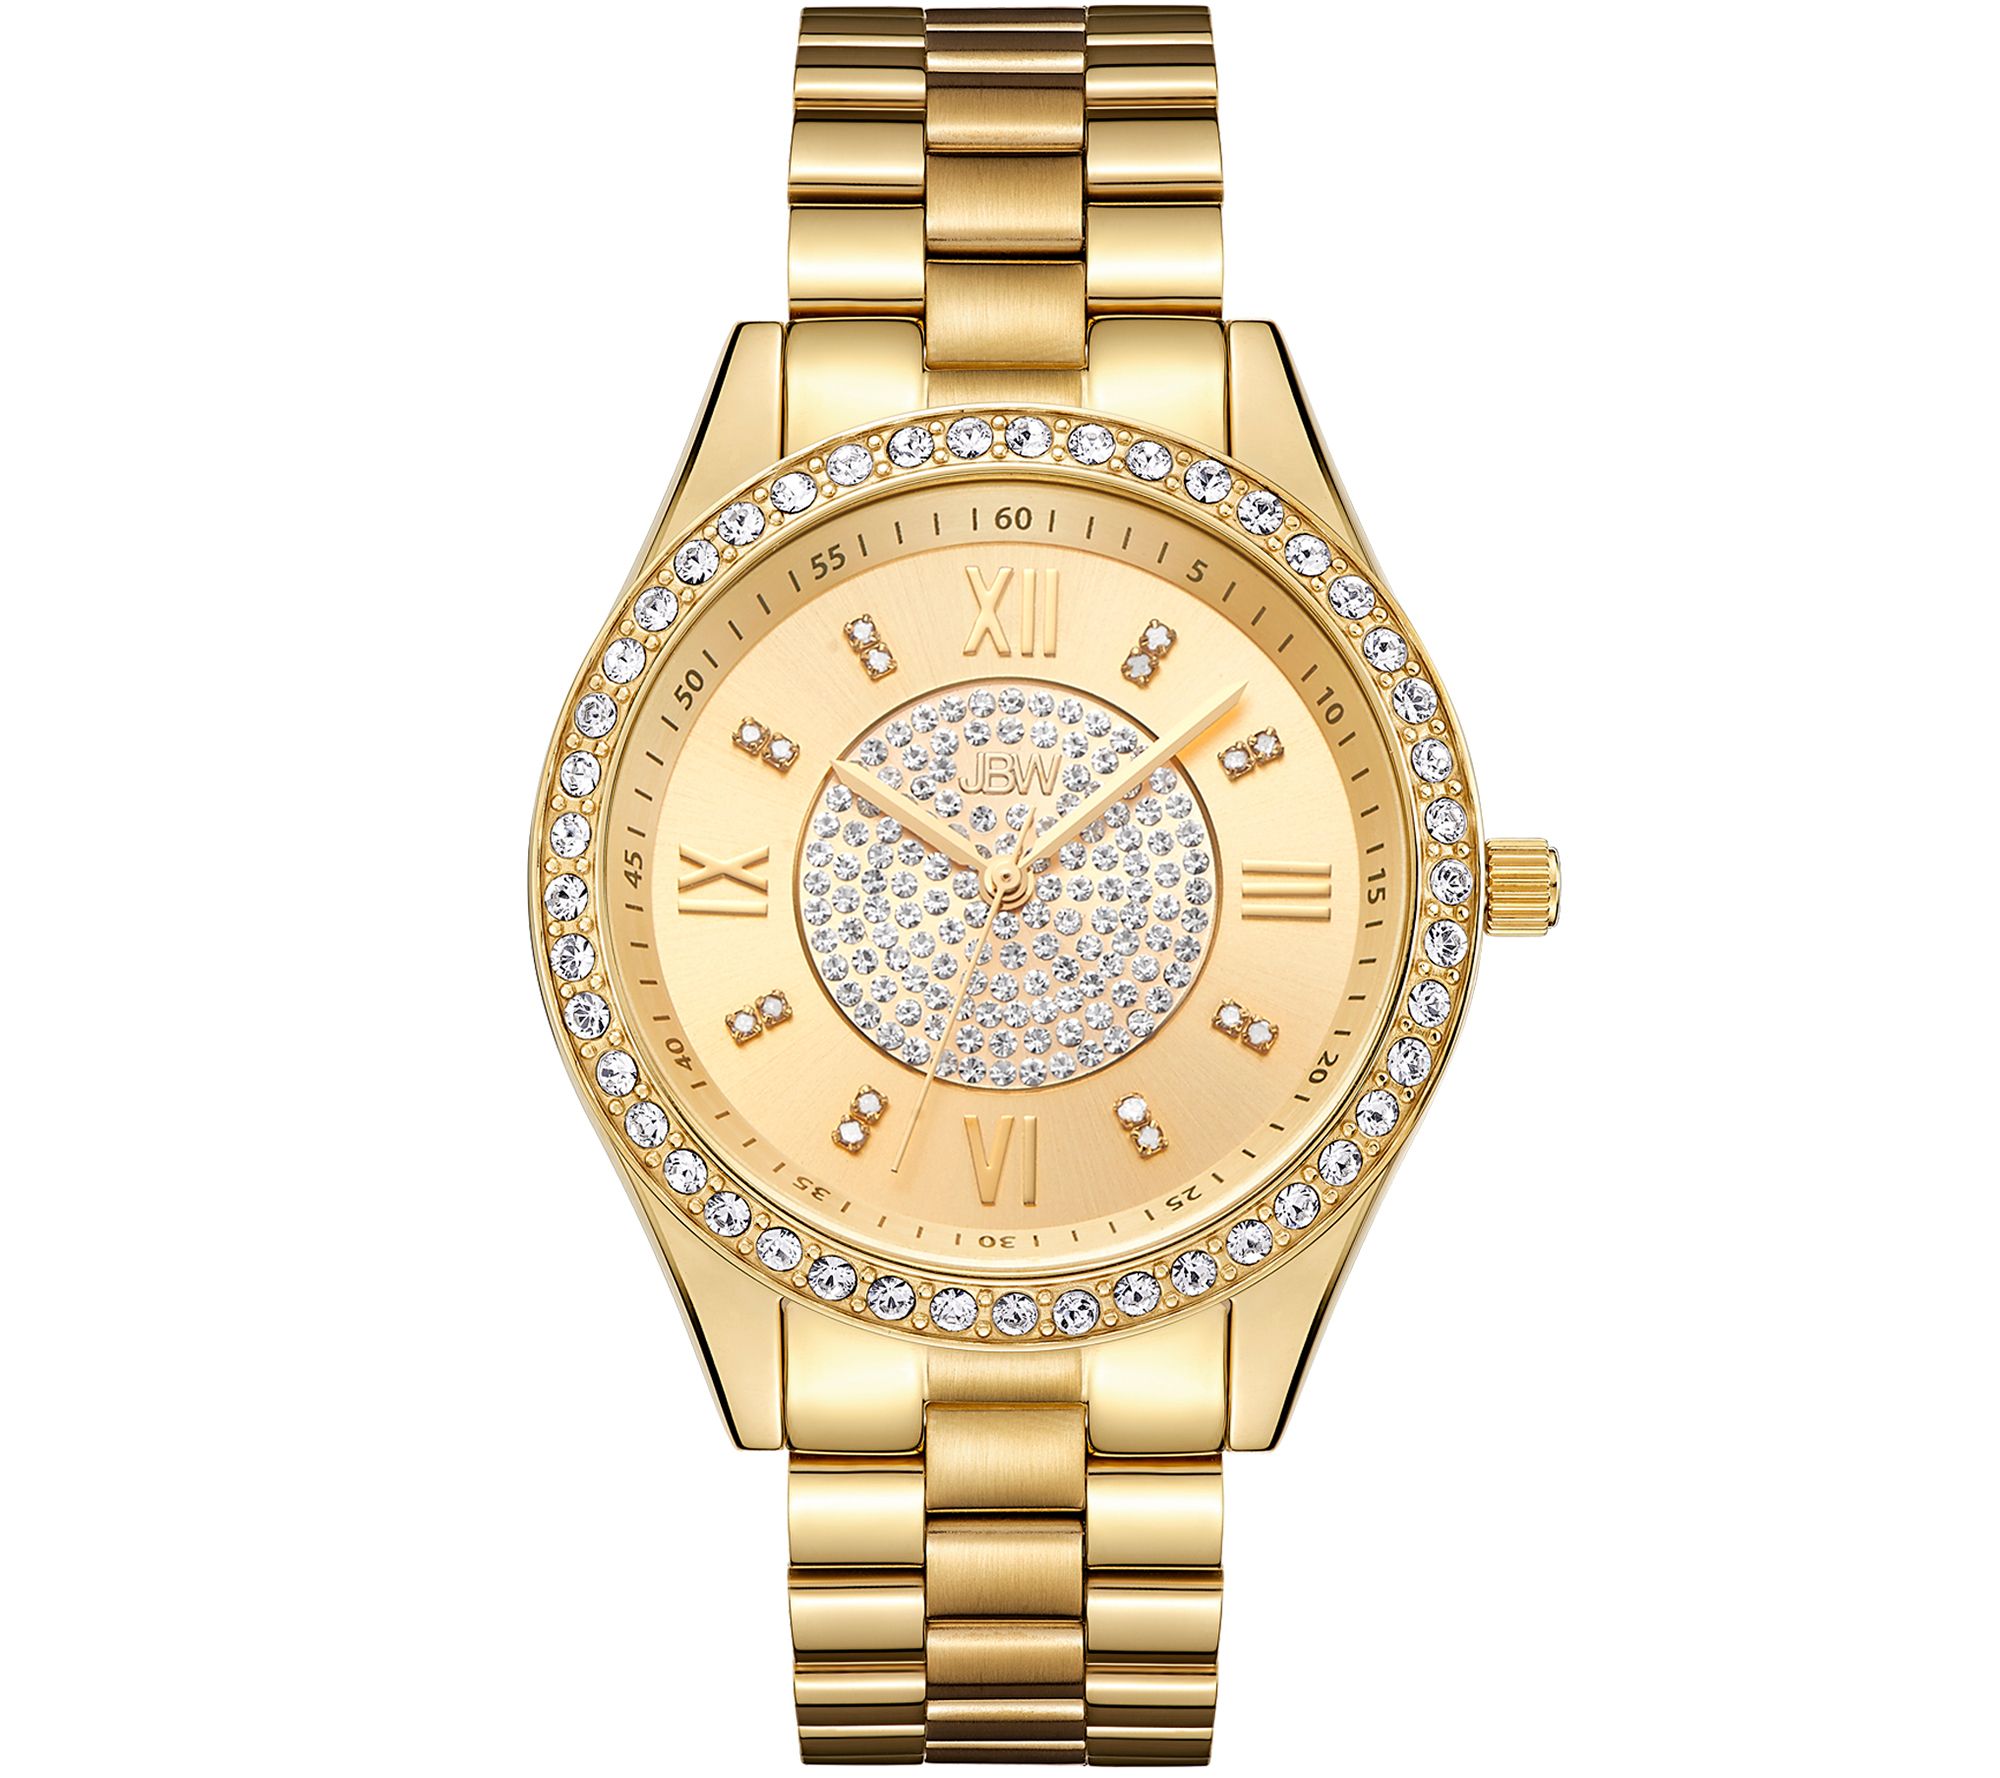 JBW Mondrian Women's Diamond 18K Gold P lated Watch - QVC.com